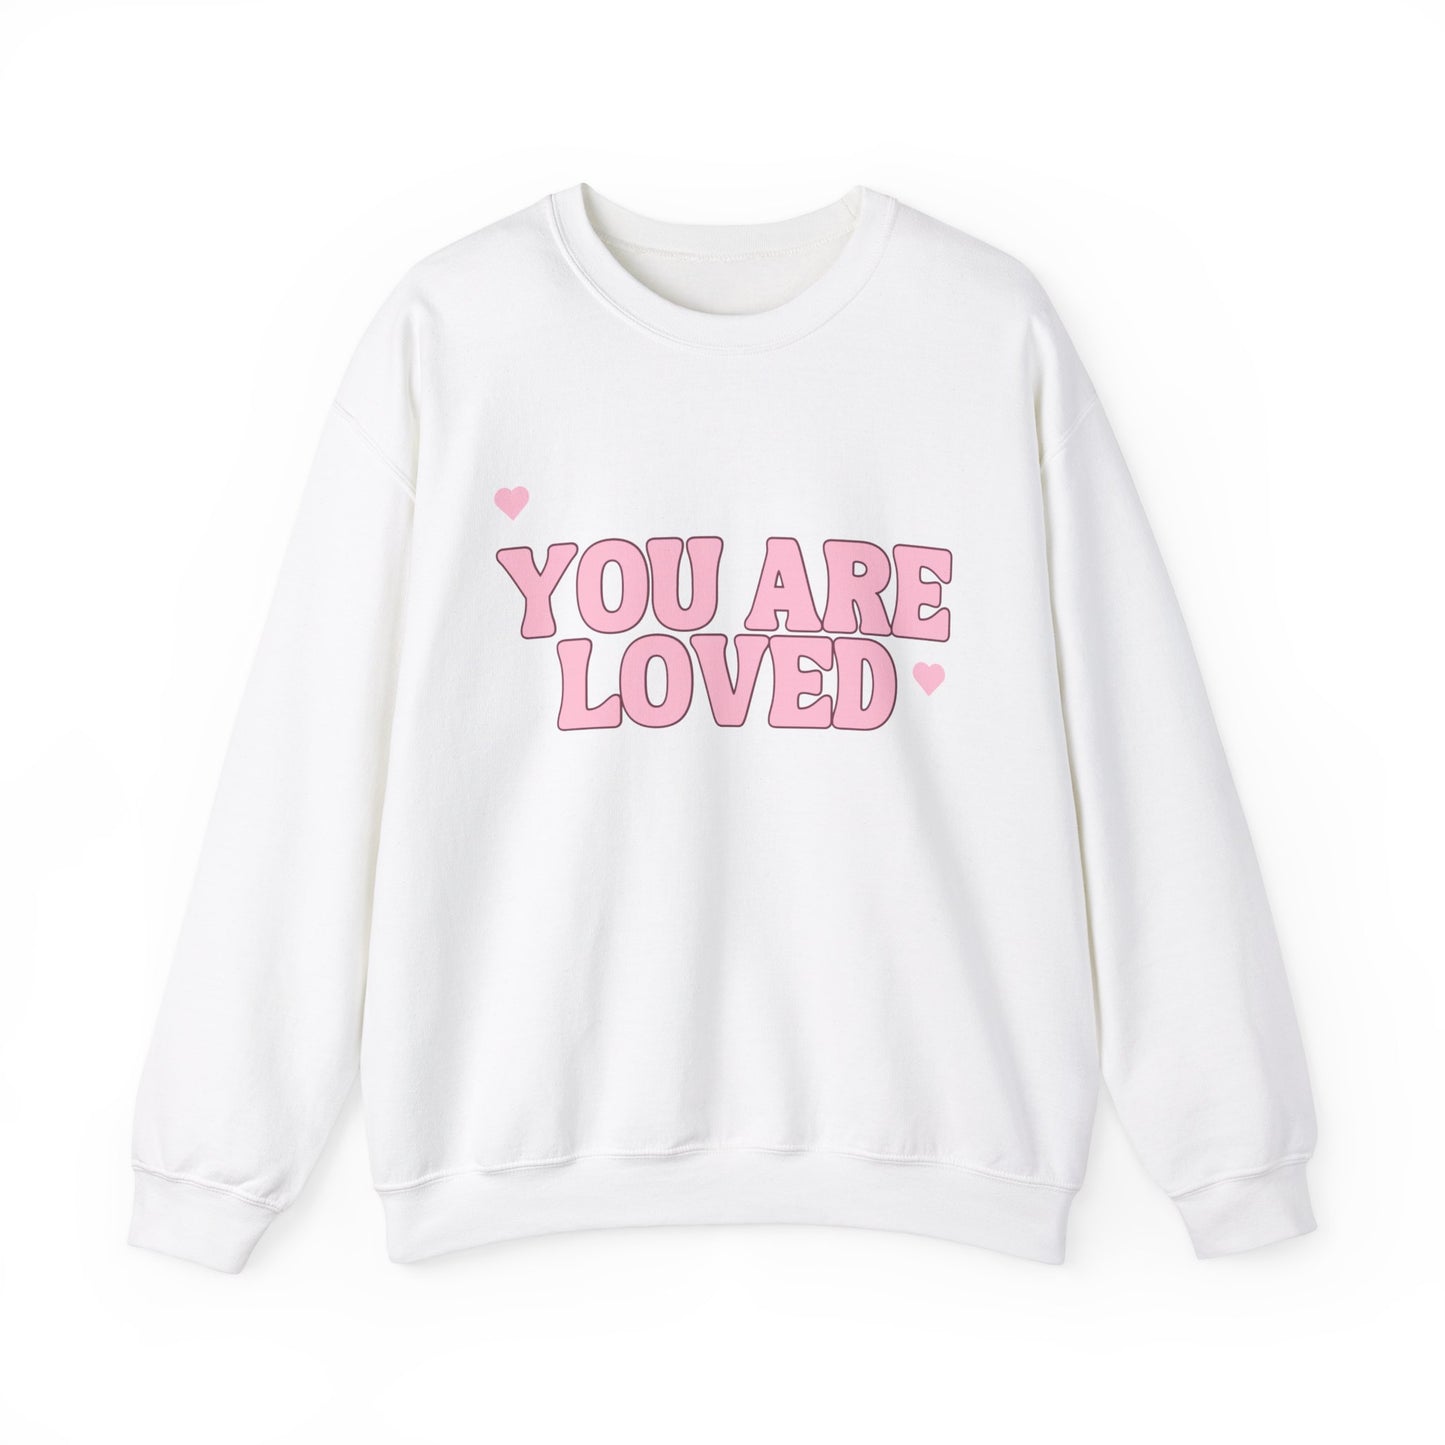 You are loved Crewneck Sweatshirt